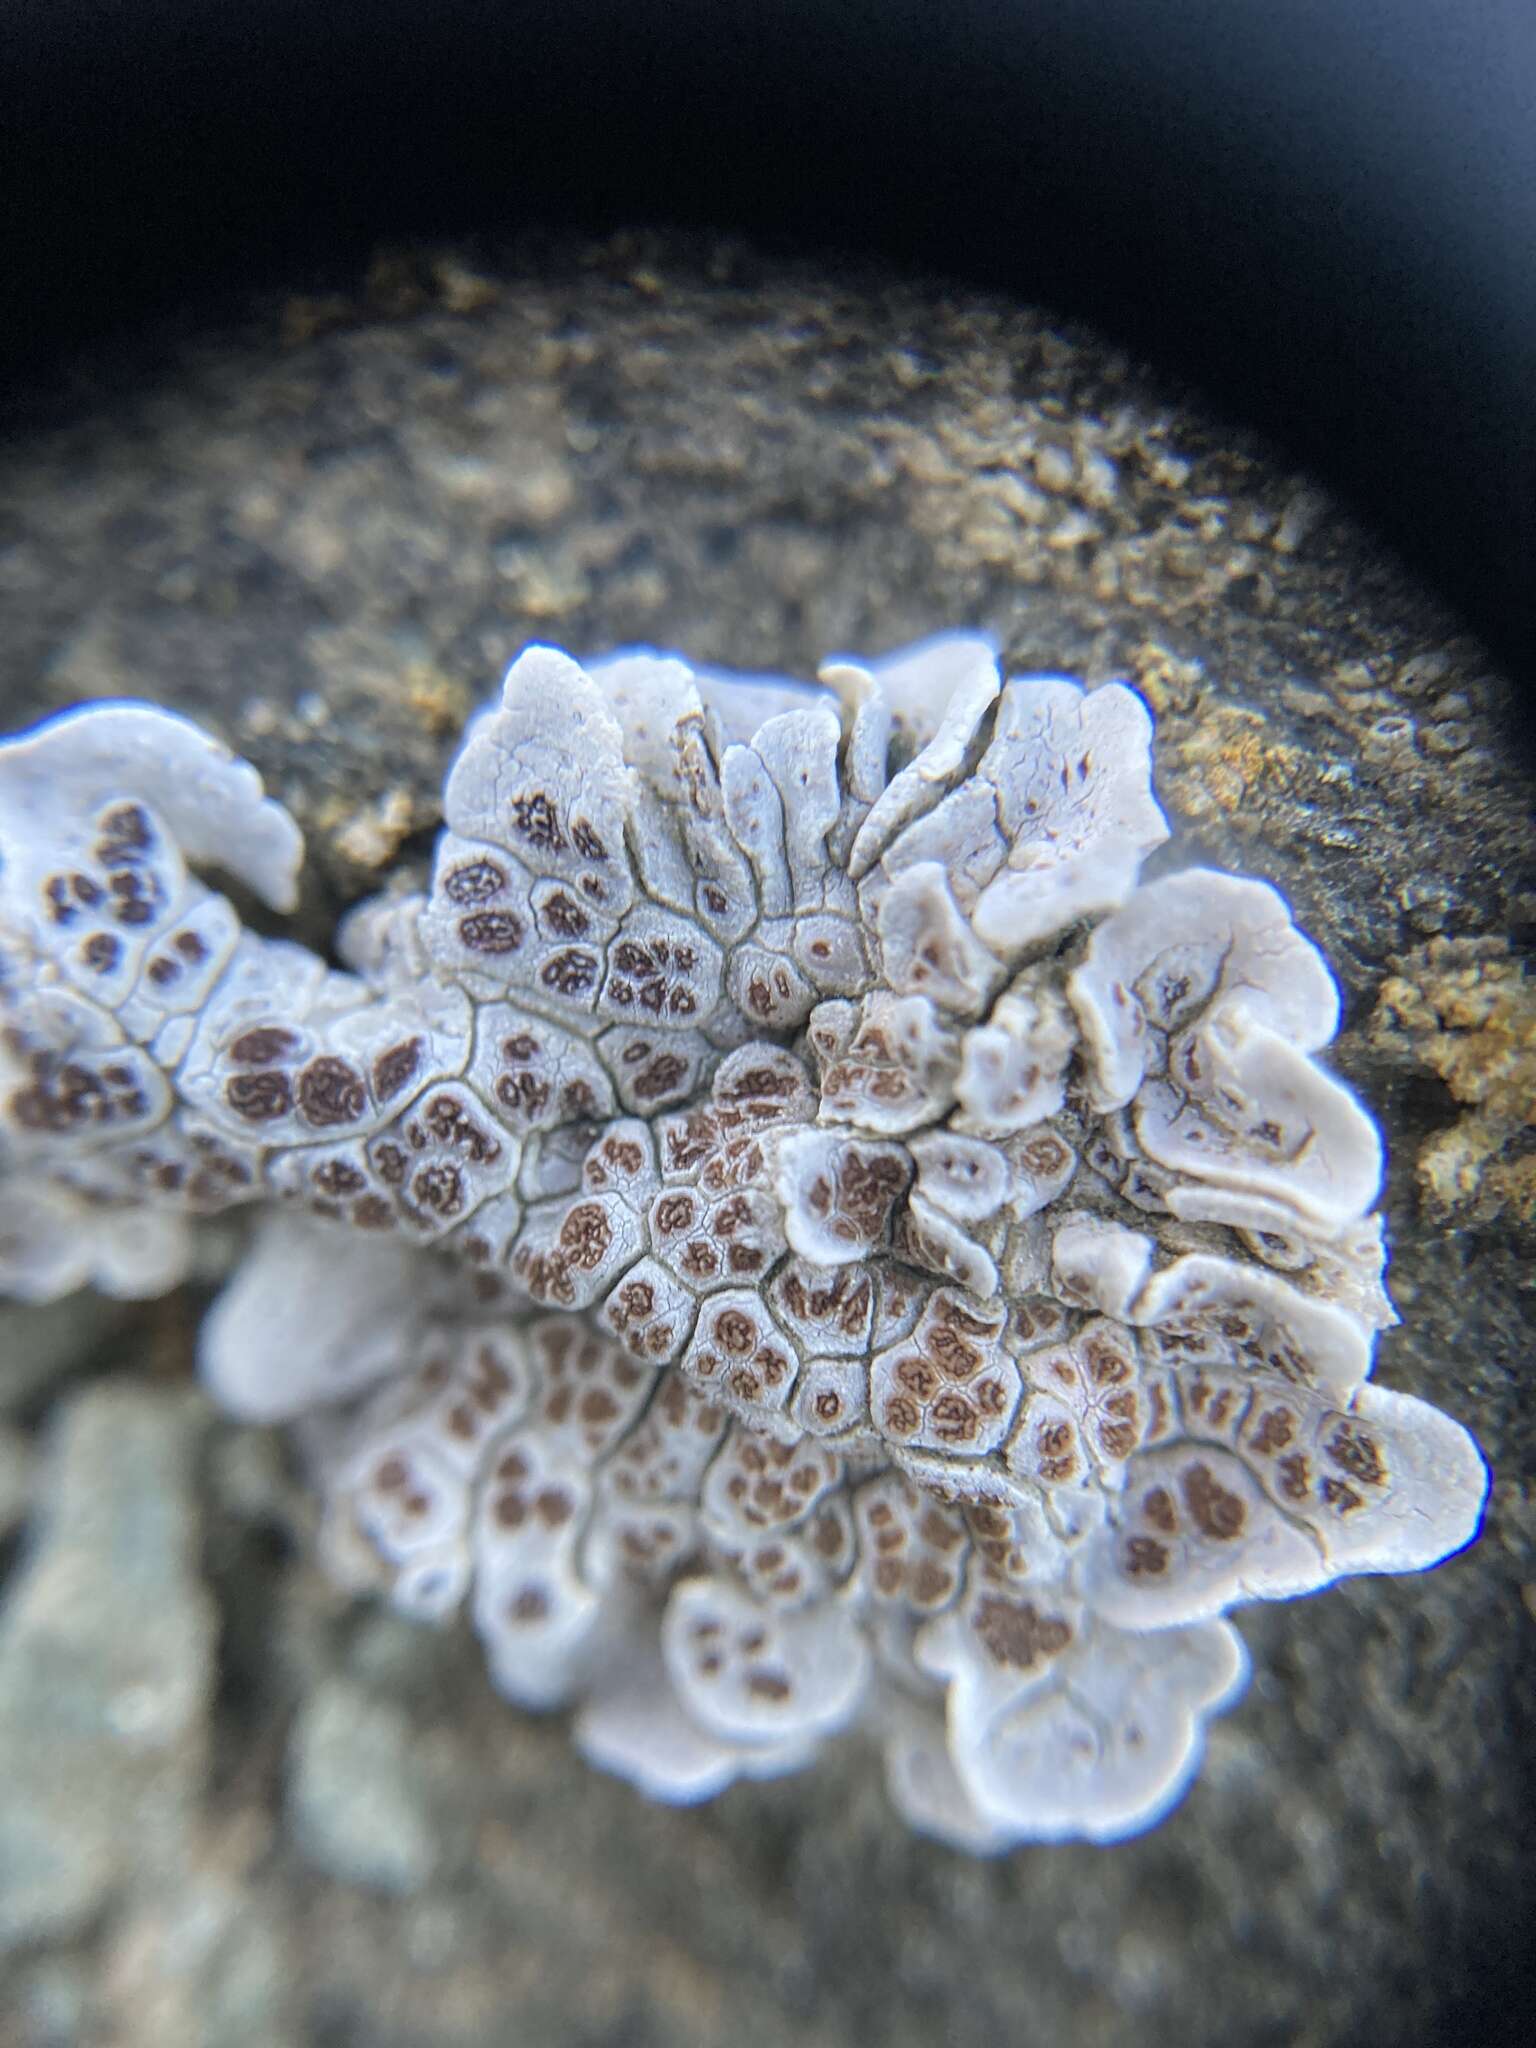 Image of glypholecia lichen